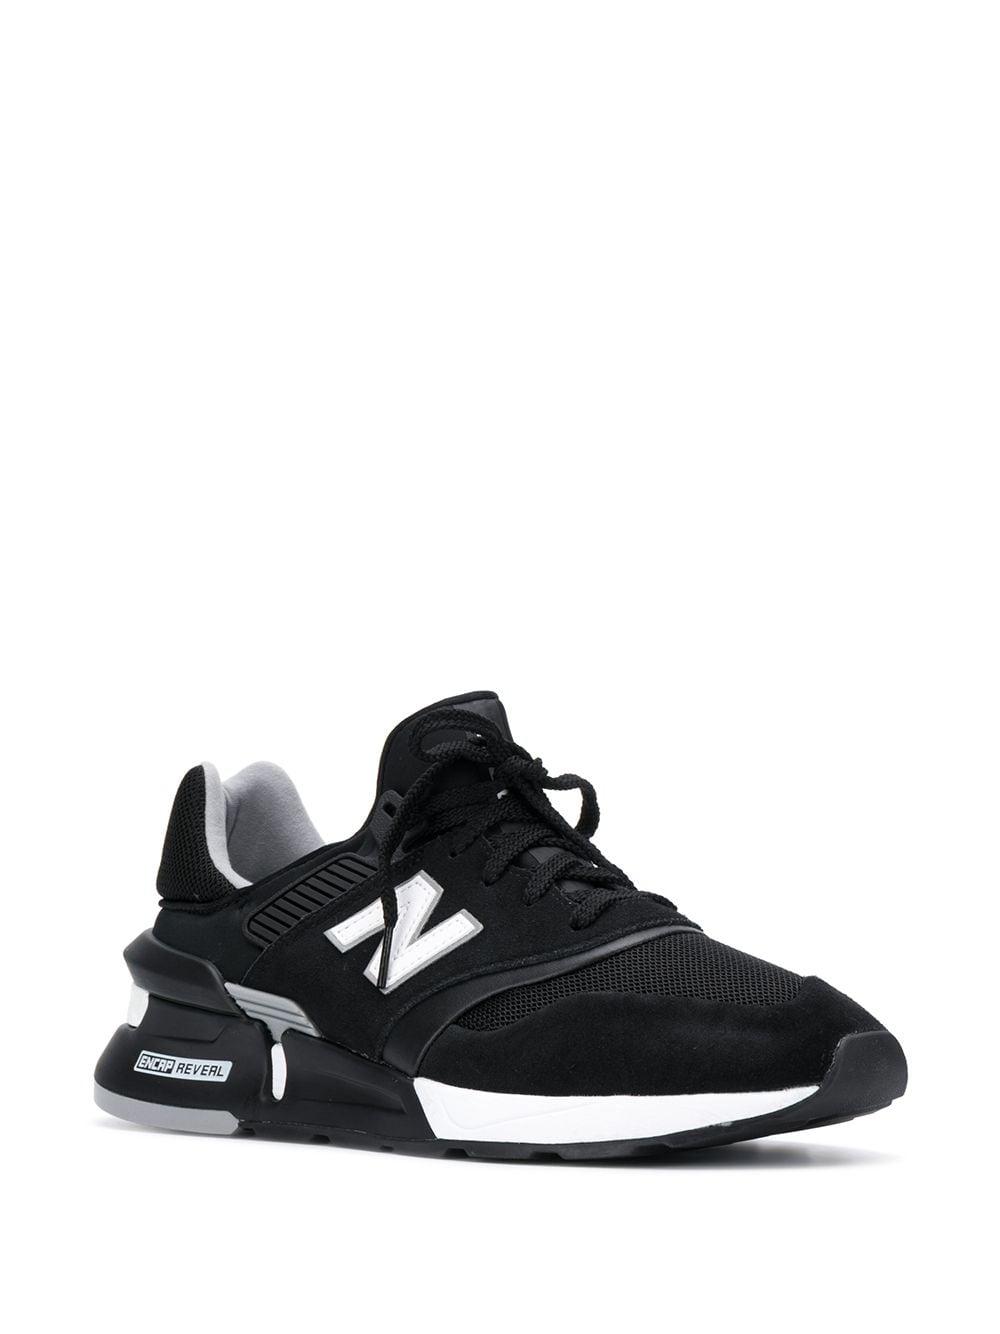 New Balance Rubber 997 Encap Reveal Sneakers in Black for Men - Lyst